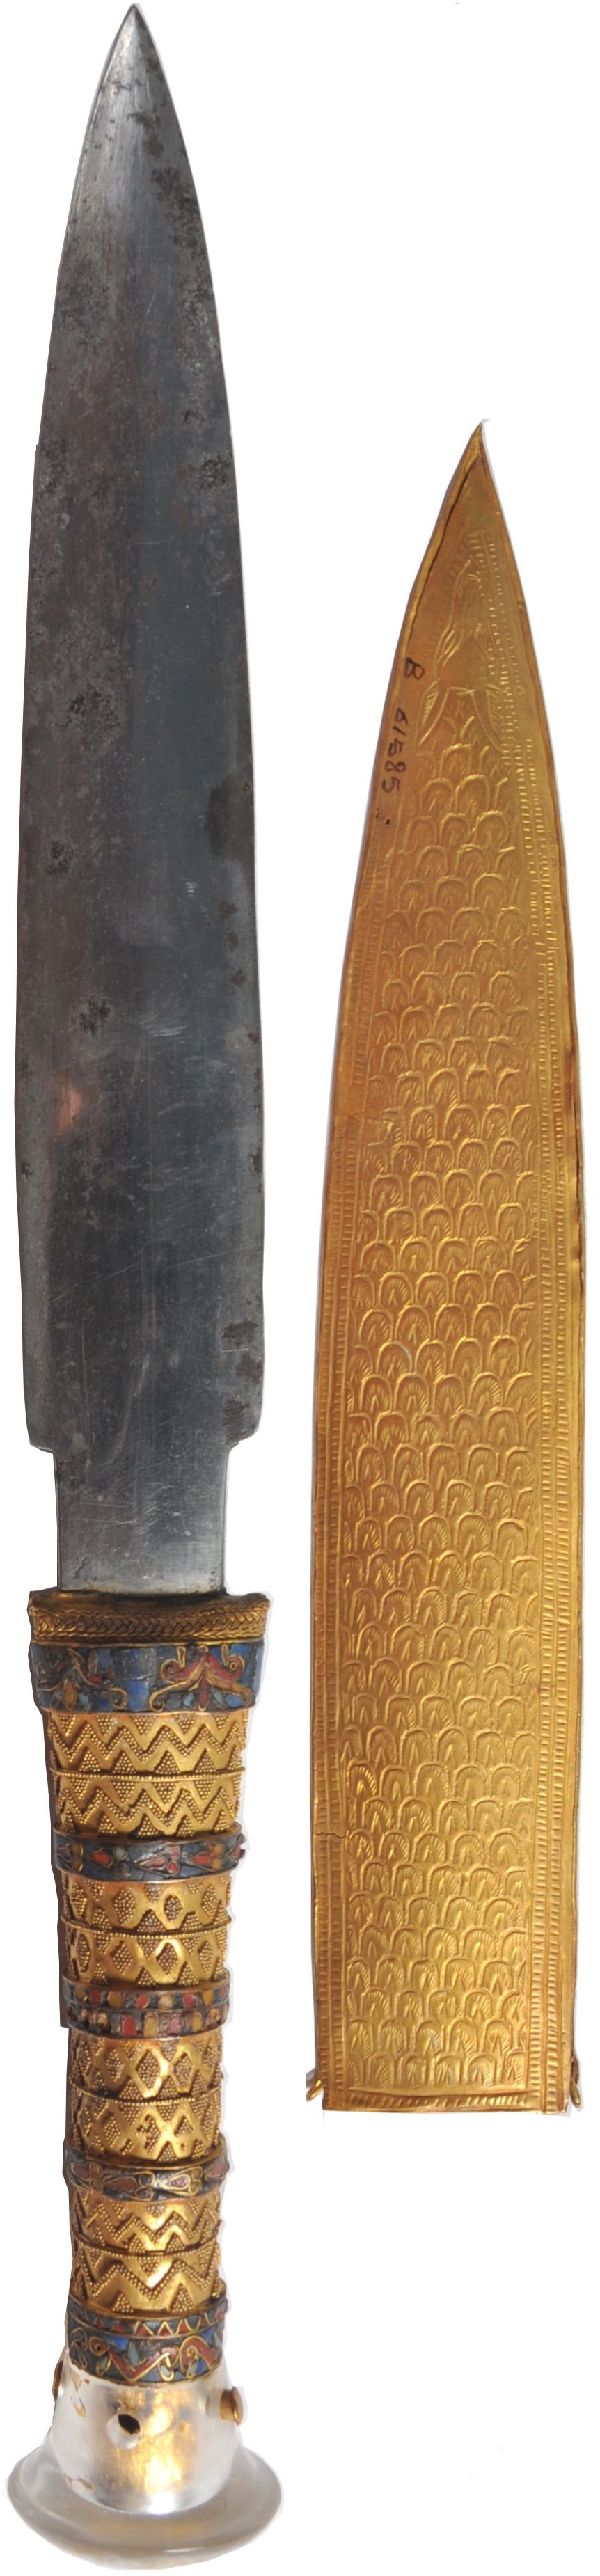 Tutankhamun's knife was 'made from meteorite iron' - BBC News